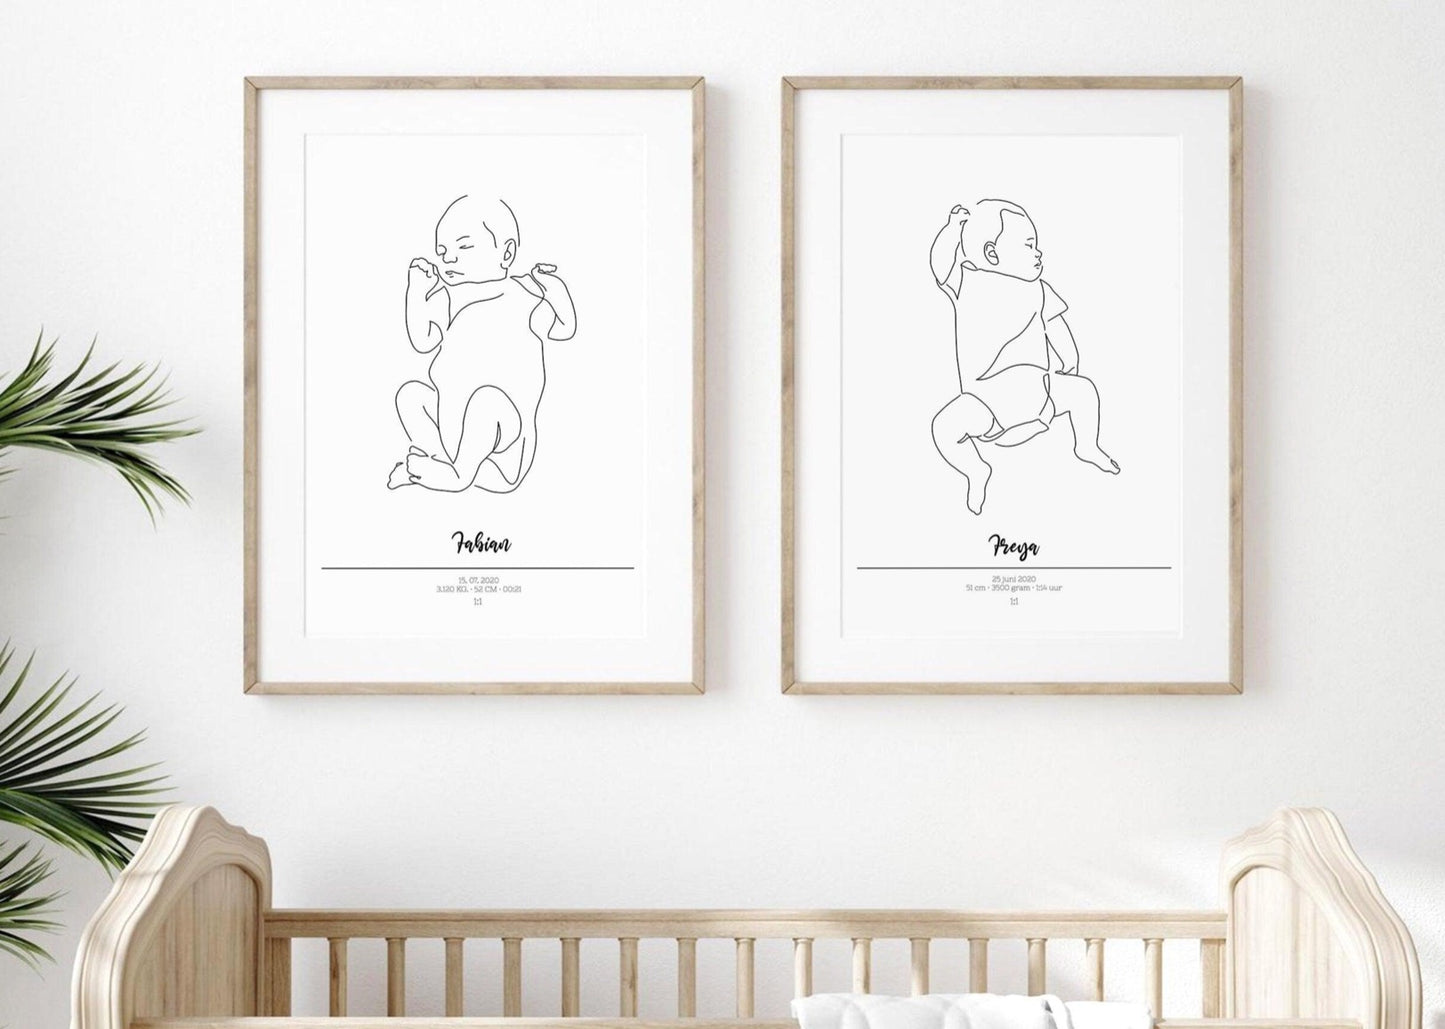 Twins birth poster 1:1 scale. Custom baby line art